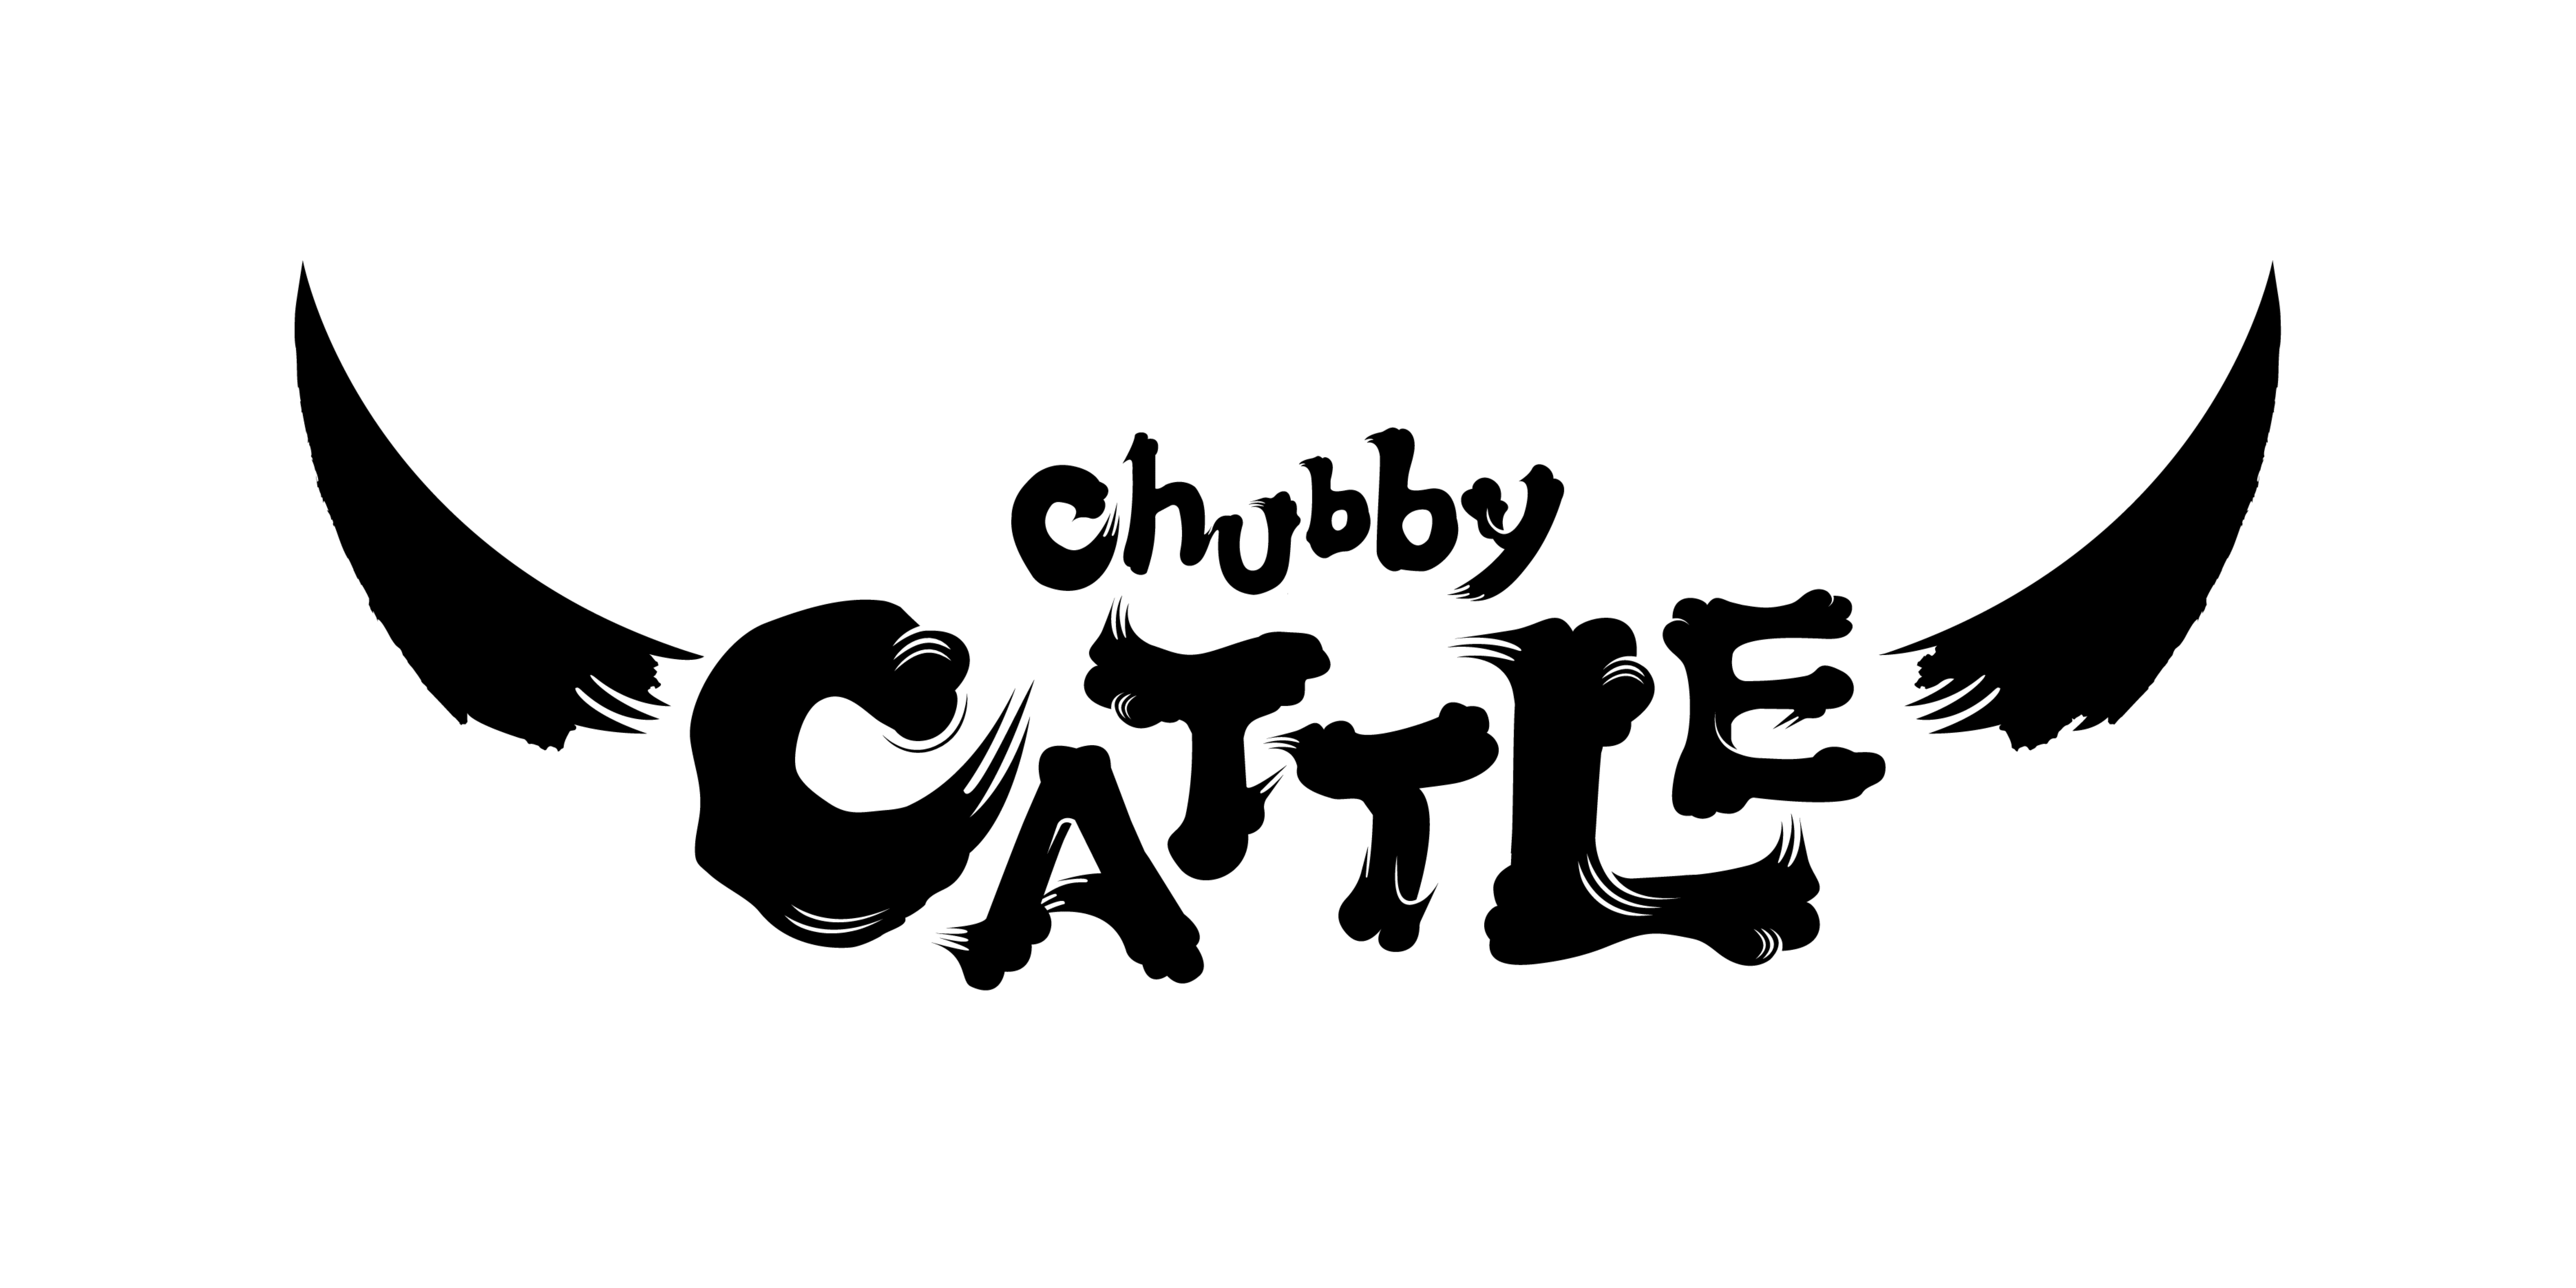 CHUBBY CATTLE LOGO